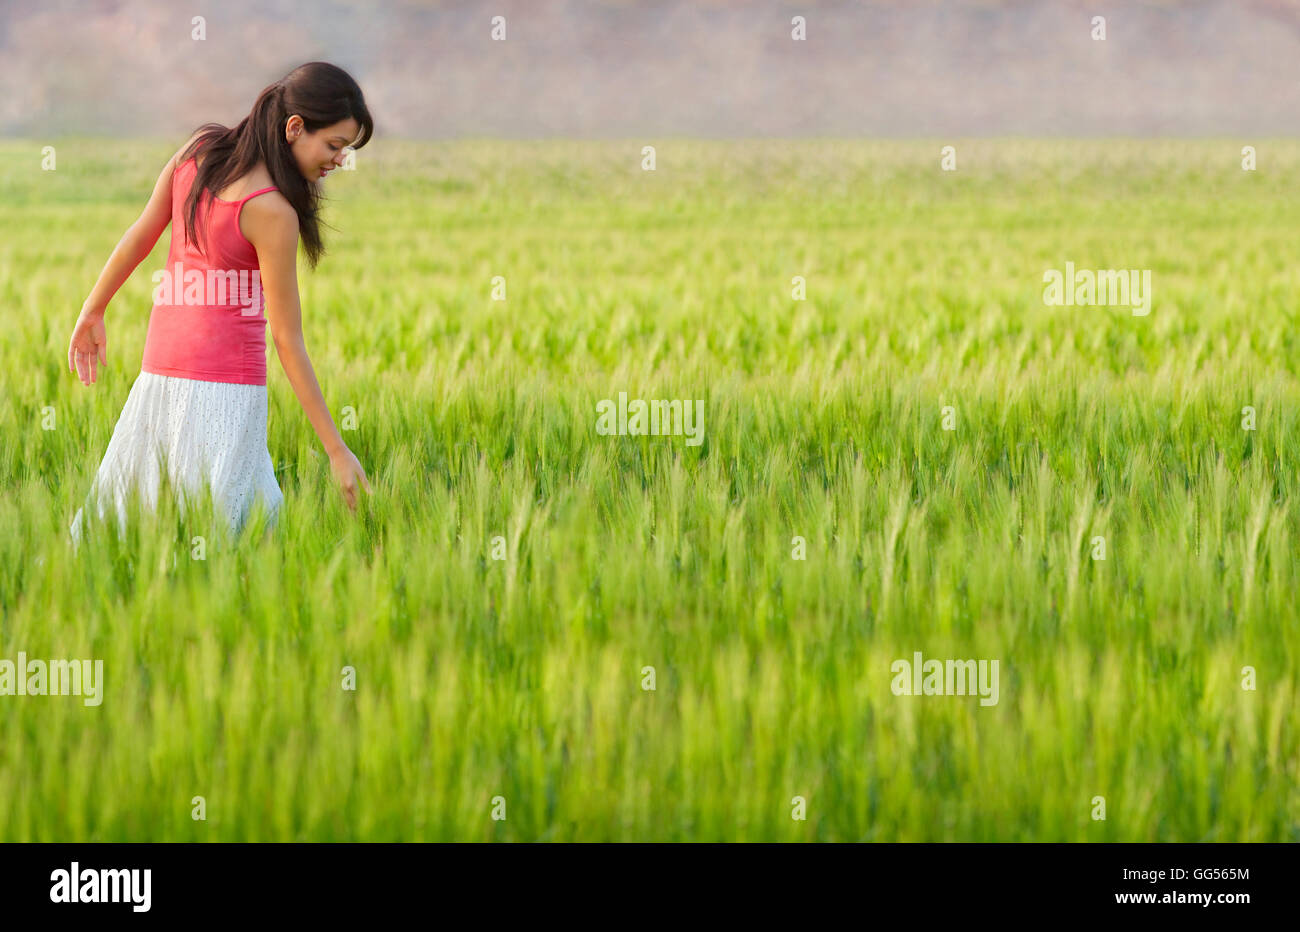 Woman walking through a field Stock Photo